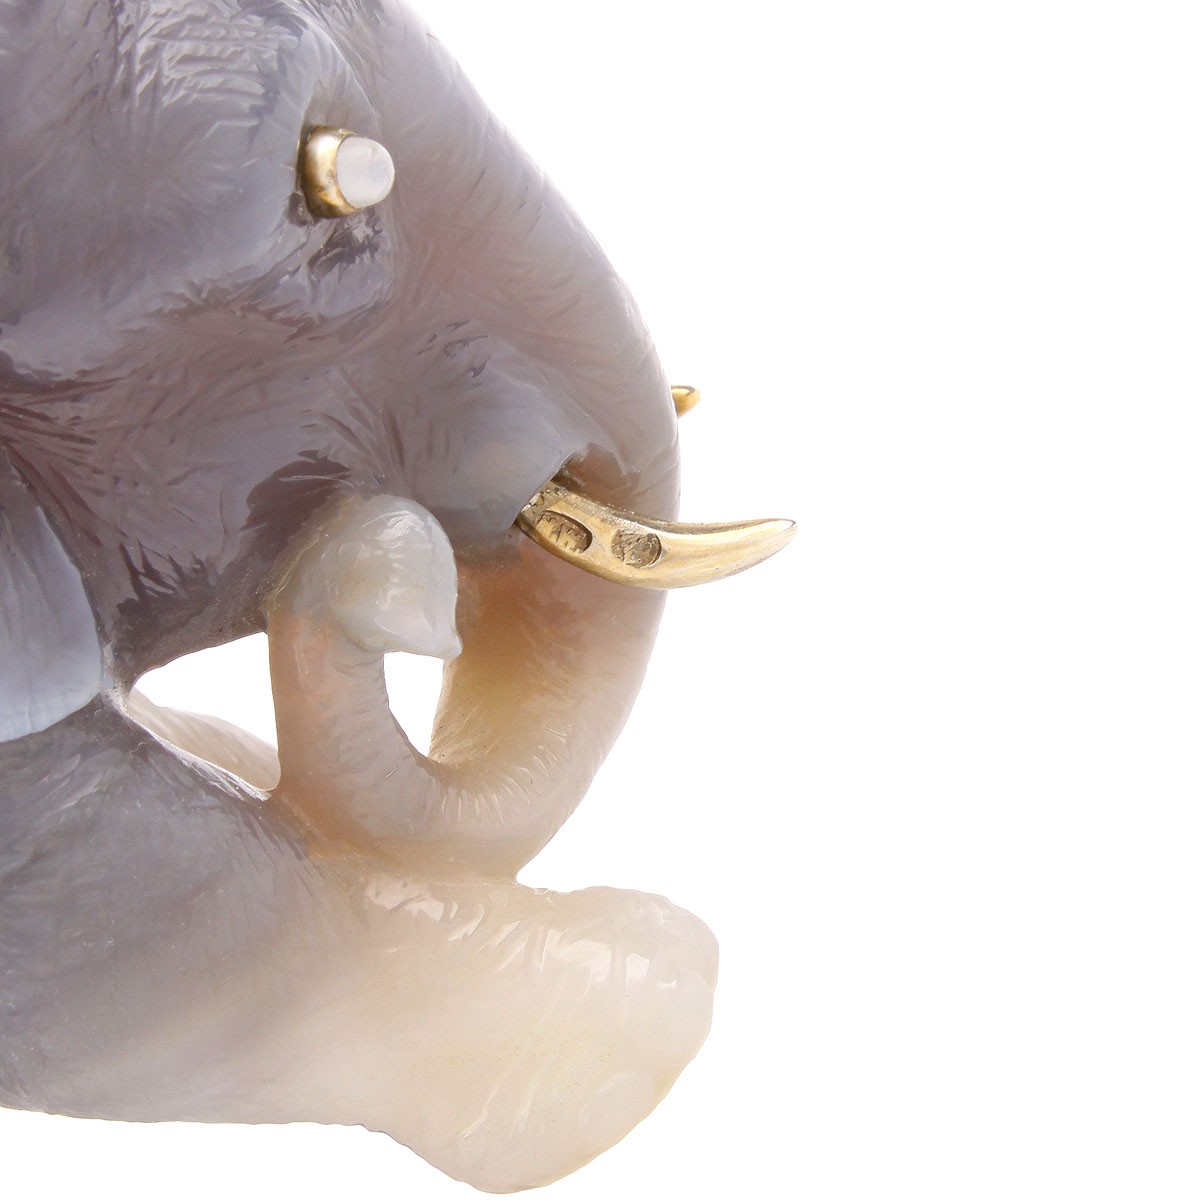 Russian Faberge Agate Elephant Figure